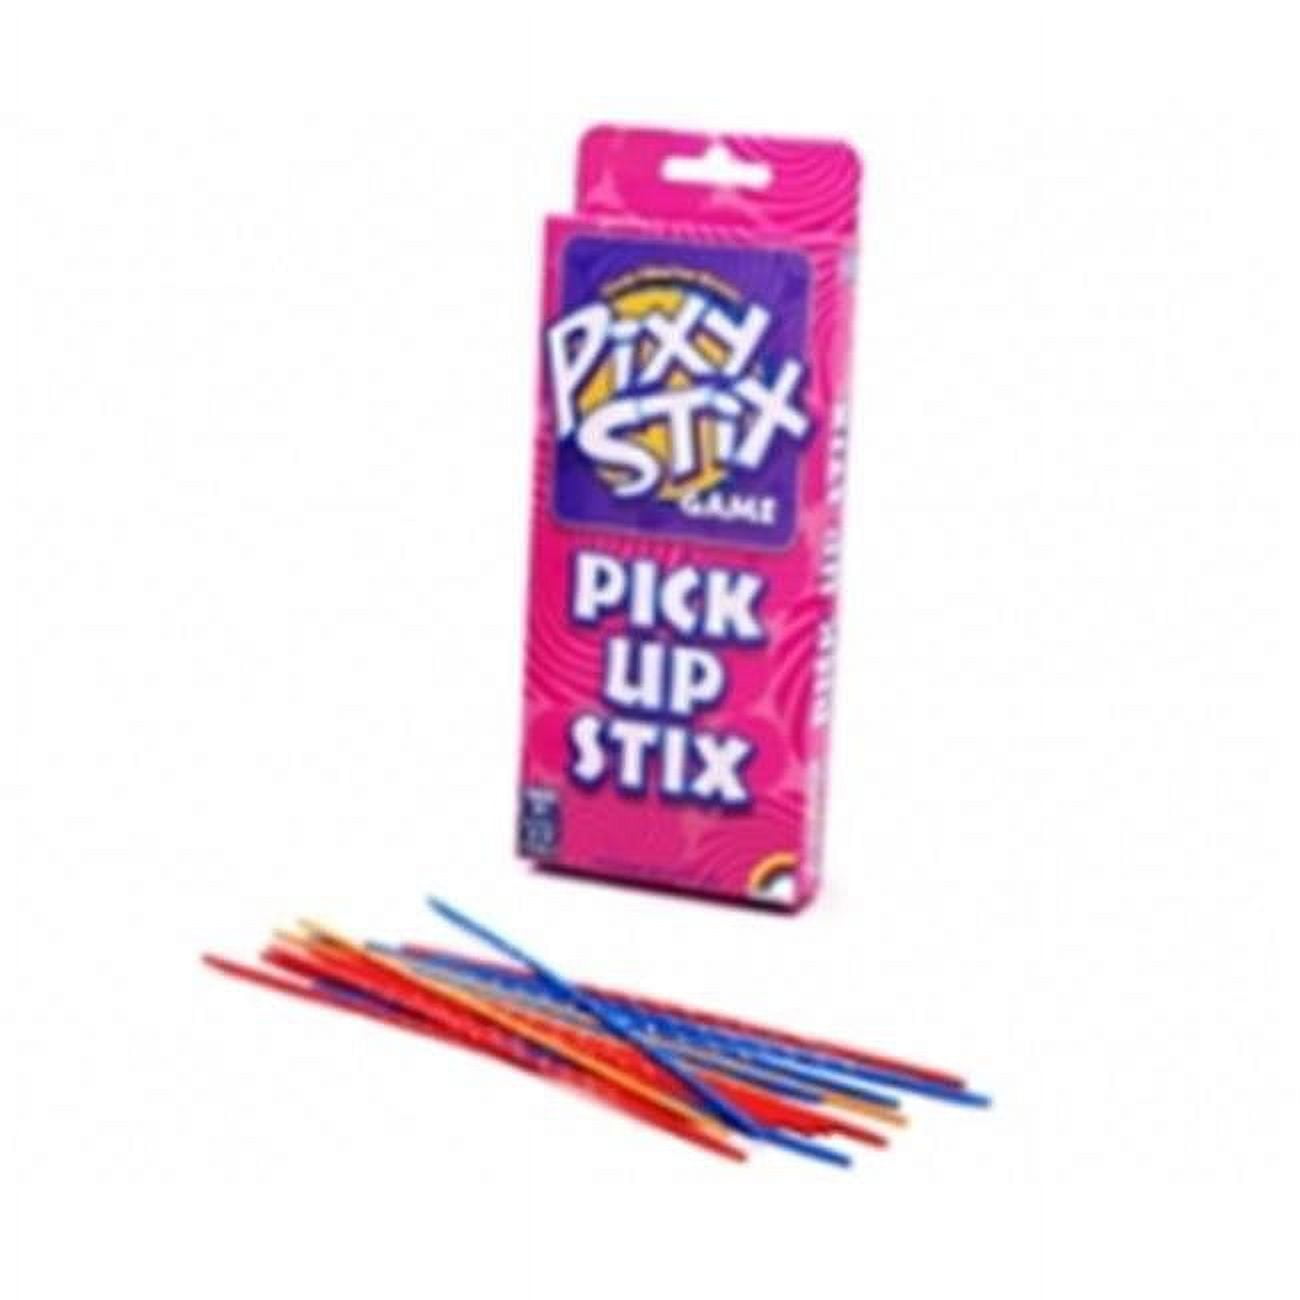 Int1090 Pixy Stix Pick Up Sticks Game